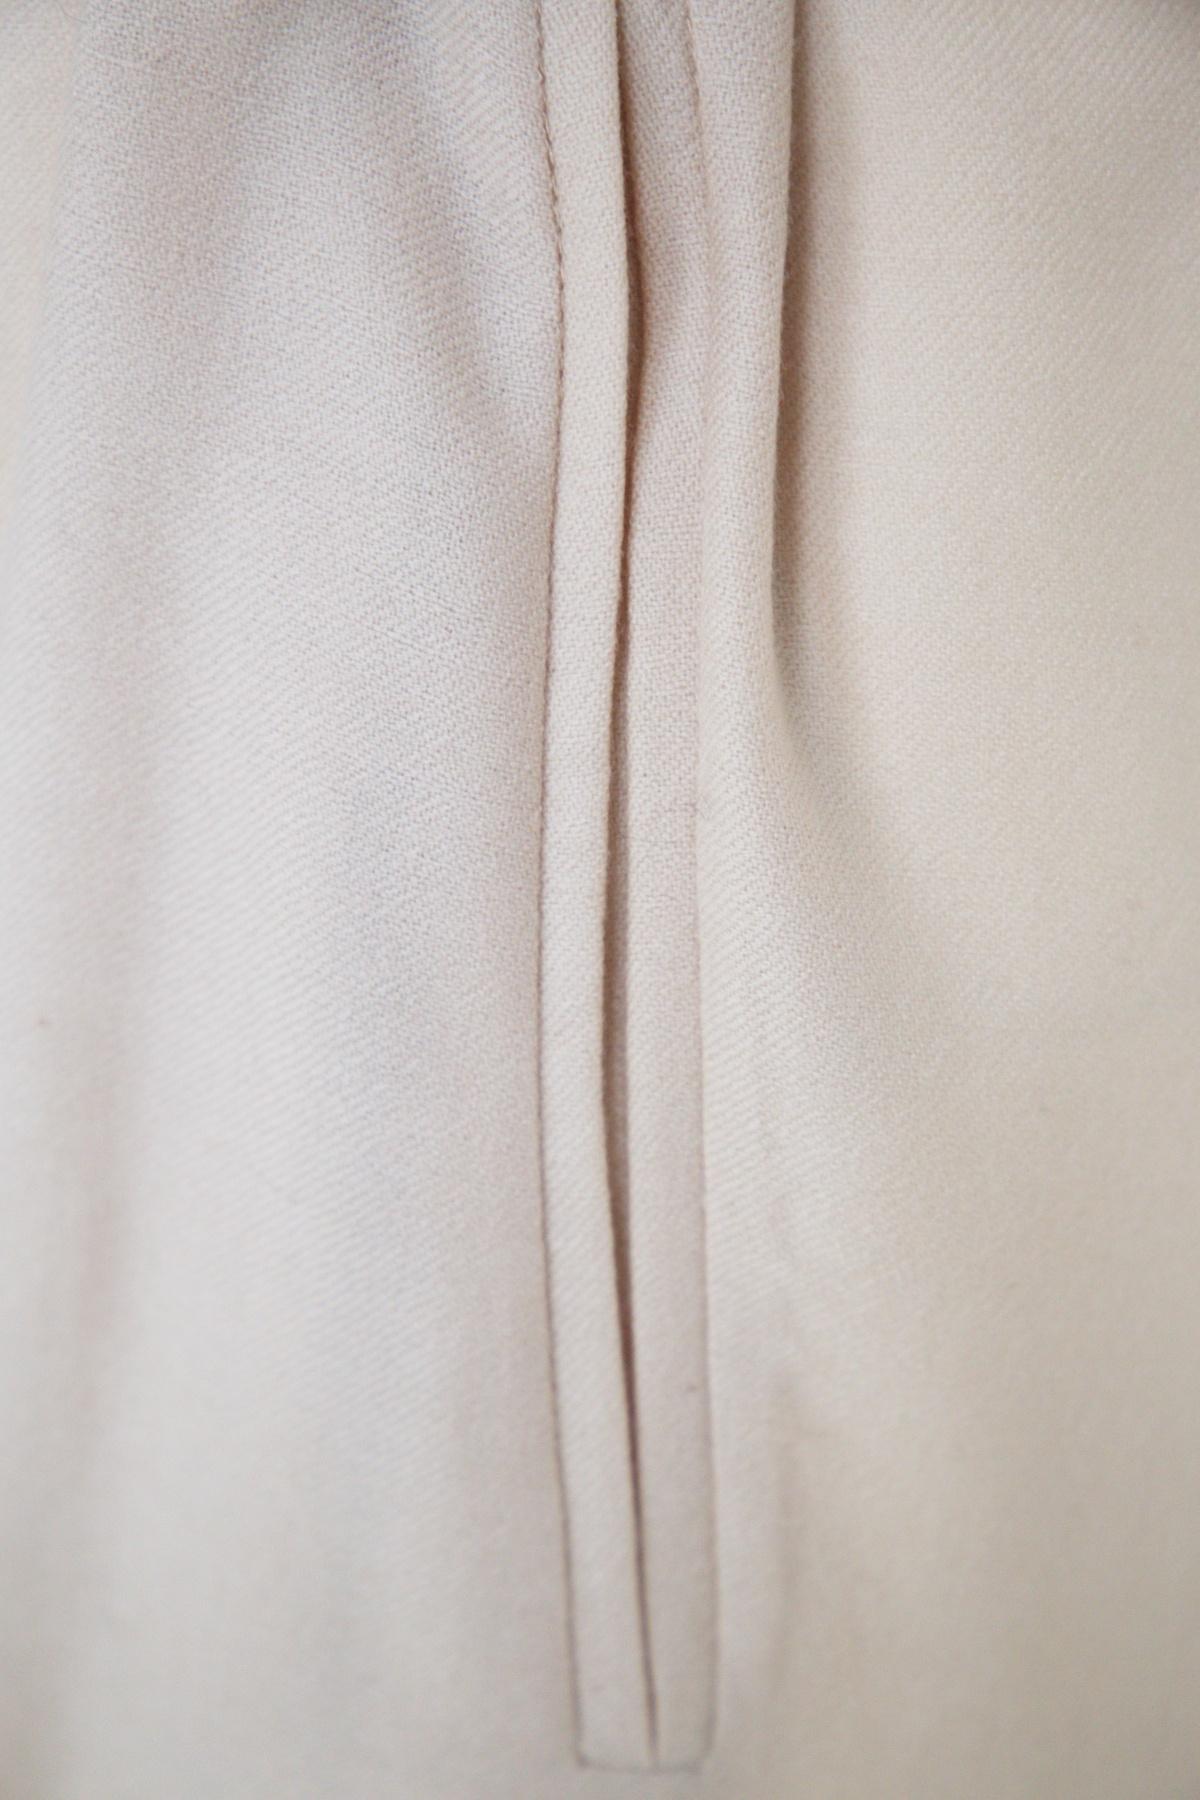 Krizia Vintage Long Dress in Beige Cotton with Belt For Sale 4